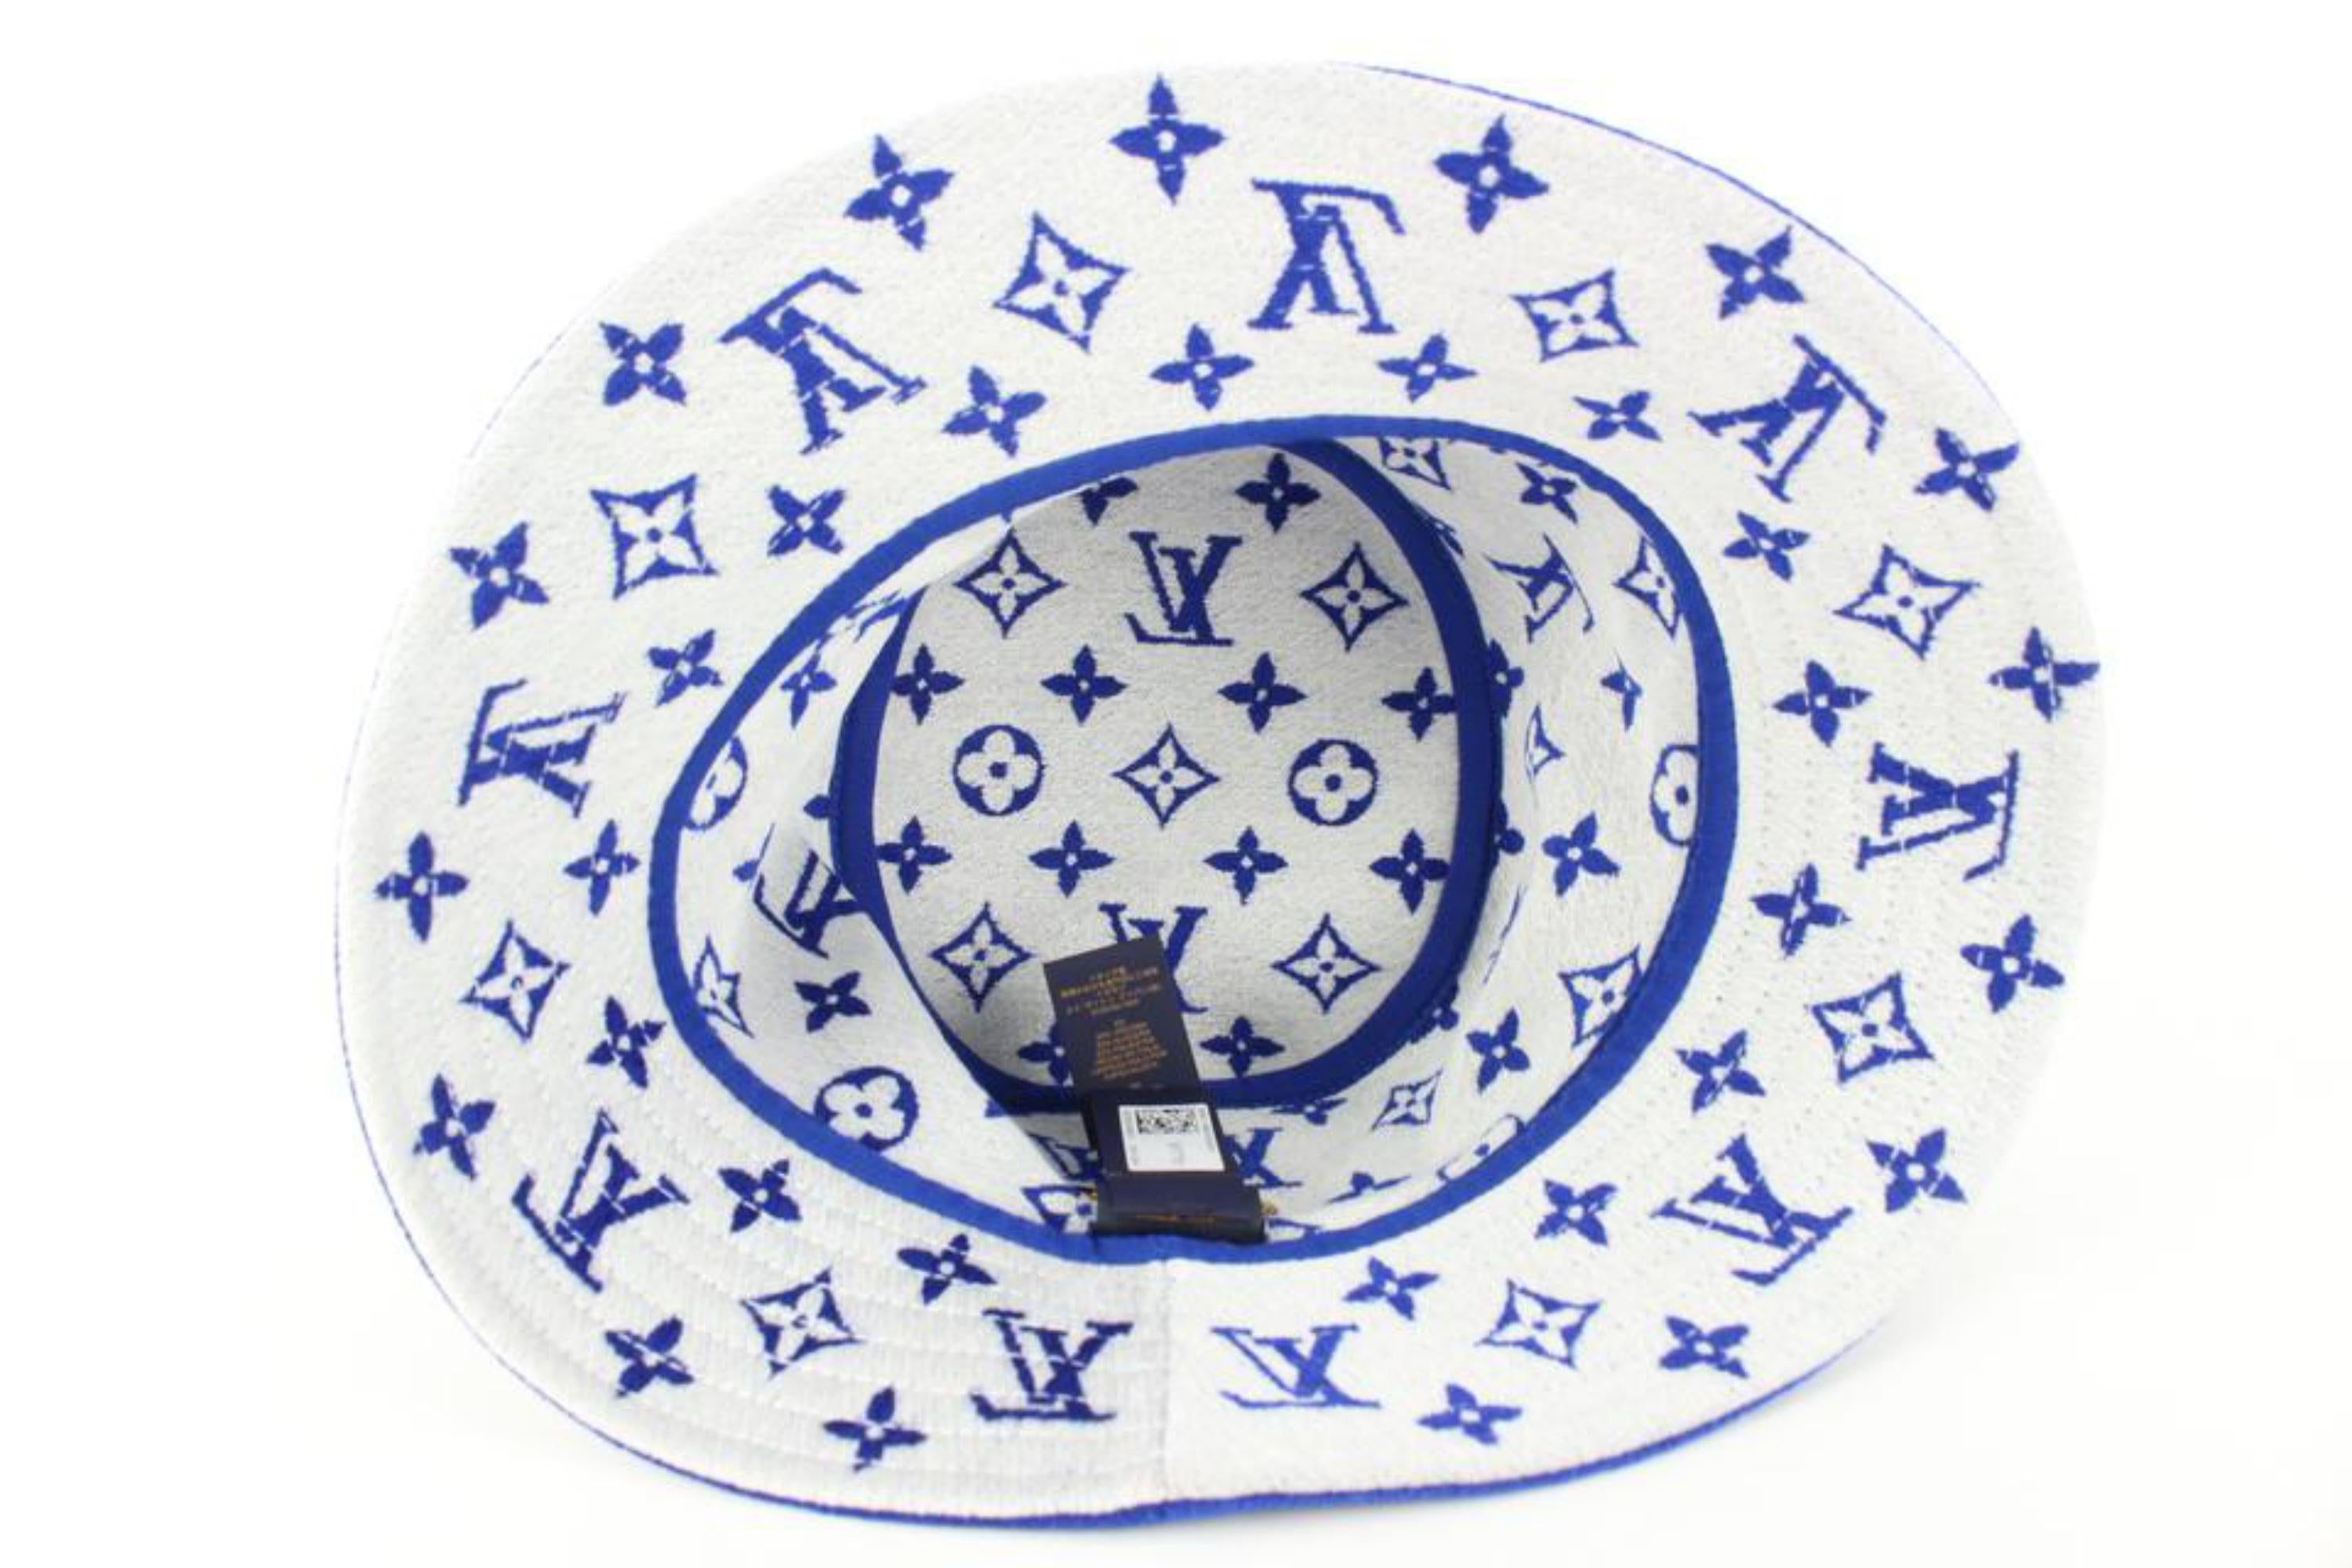 Louis Vuitton Heart Patch Emblazoned Blue Monogram Bucket Hat